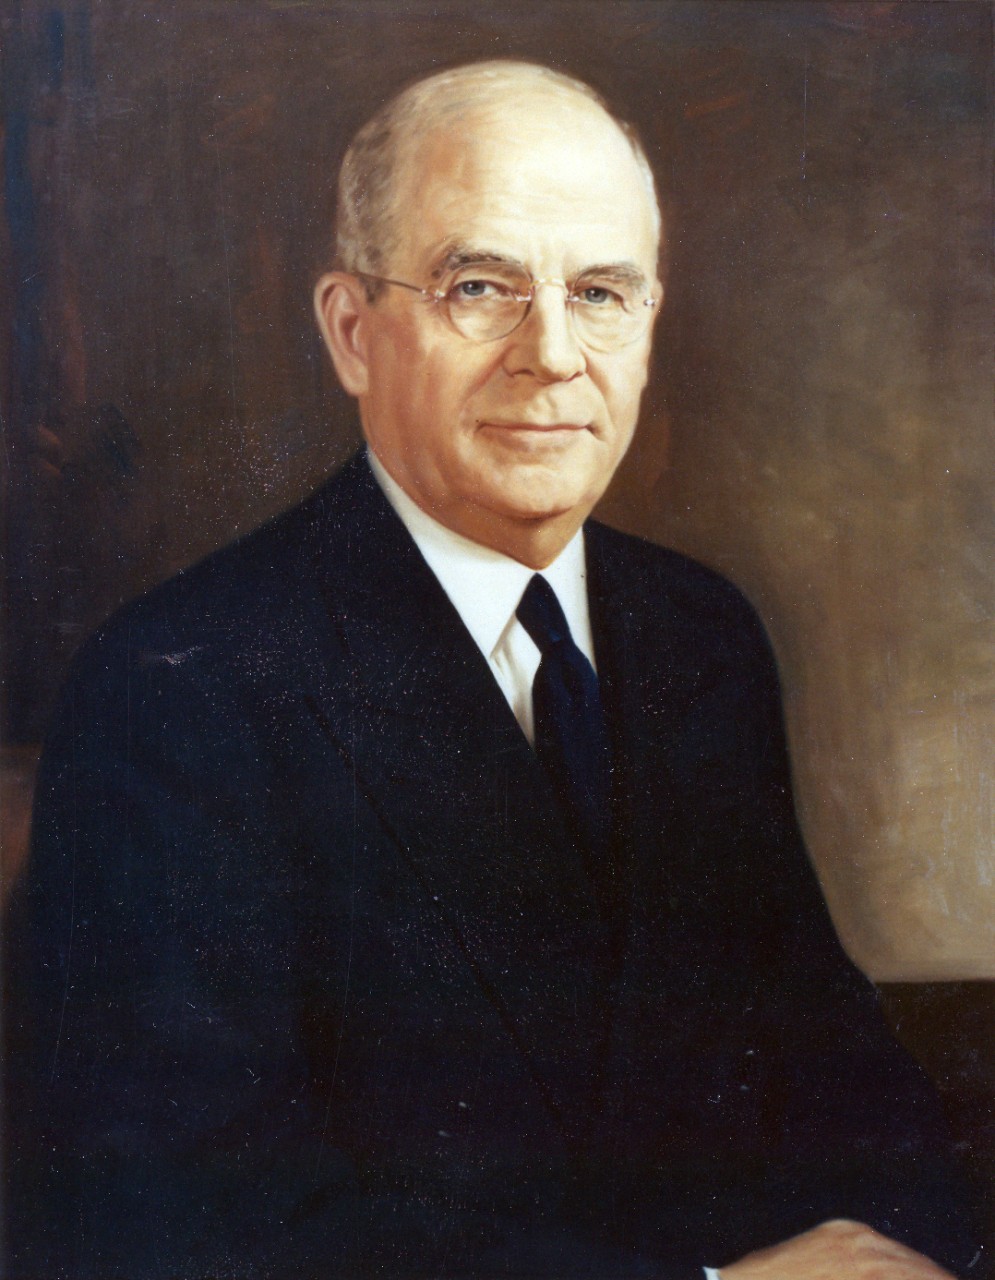 Photo #: NH 77355-KN Francis P. Matthews, Secretary of the Navy, 25 May 1949 - 31 July 1951  